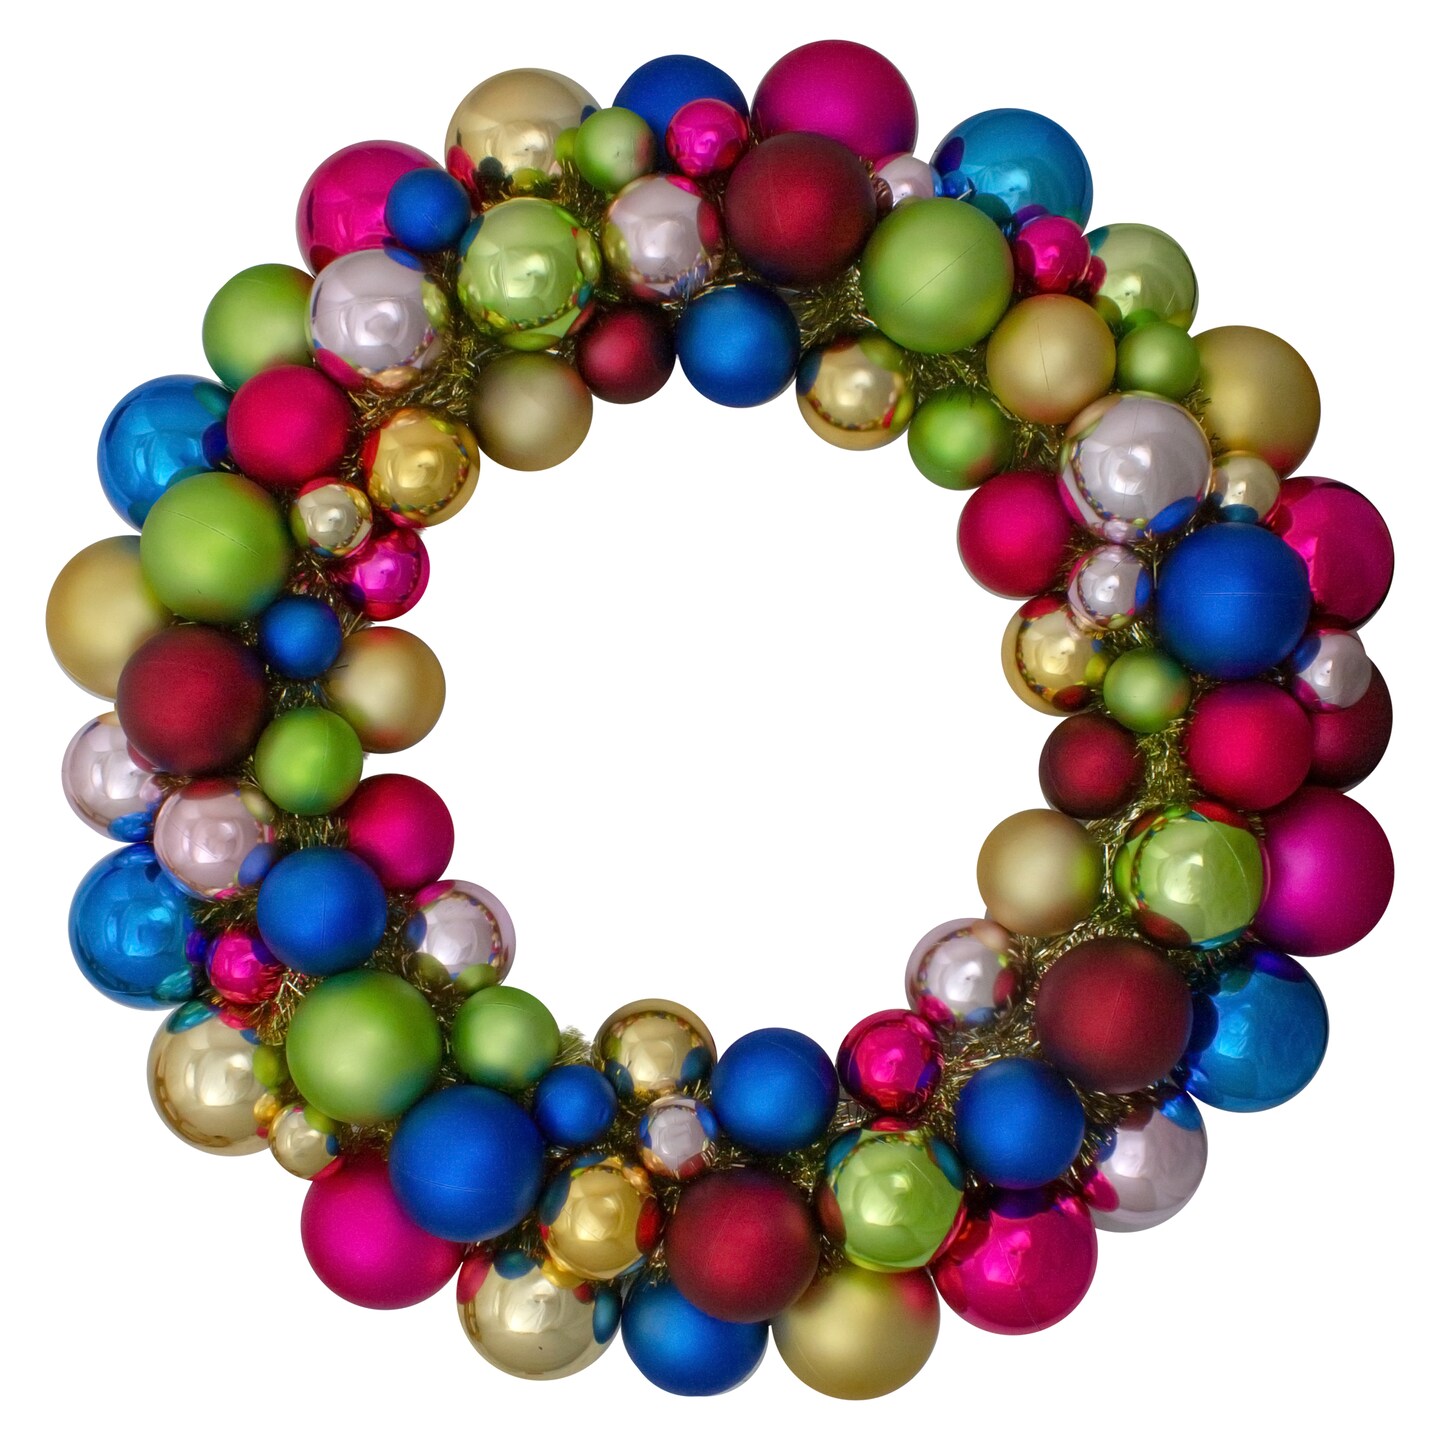 Northlight Multi-Color 2-Finish Shatterproof Ball Christmas Wreath, 24-Inch